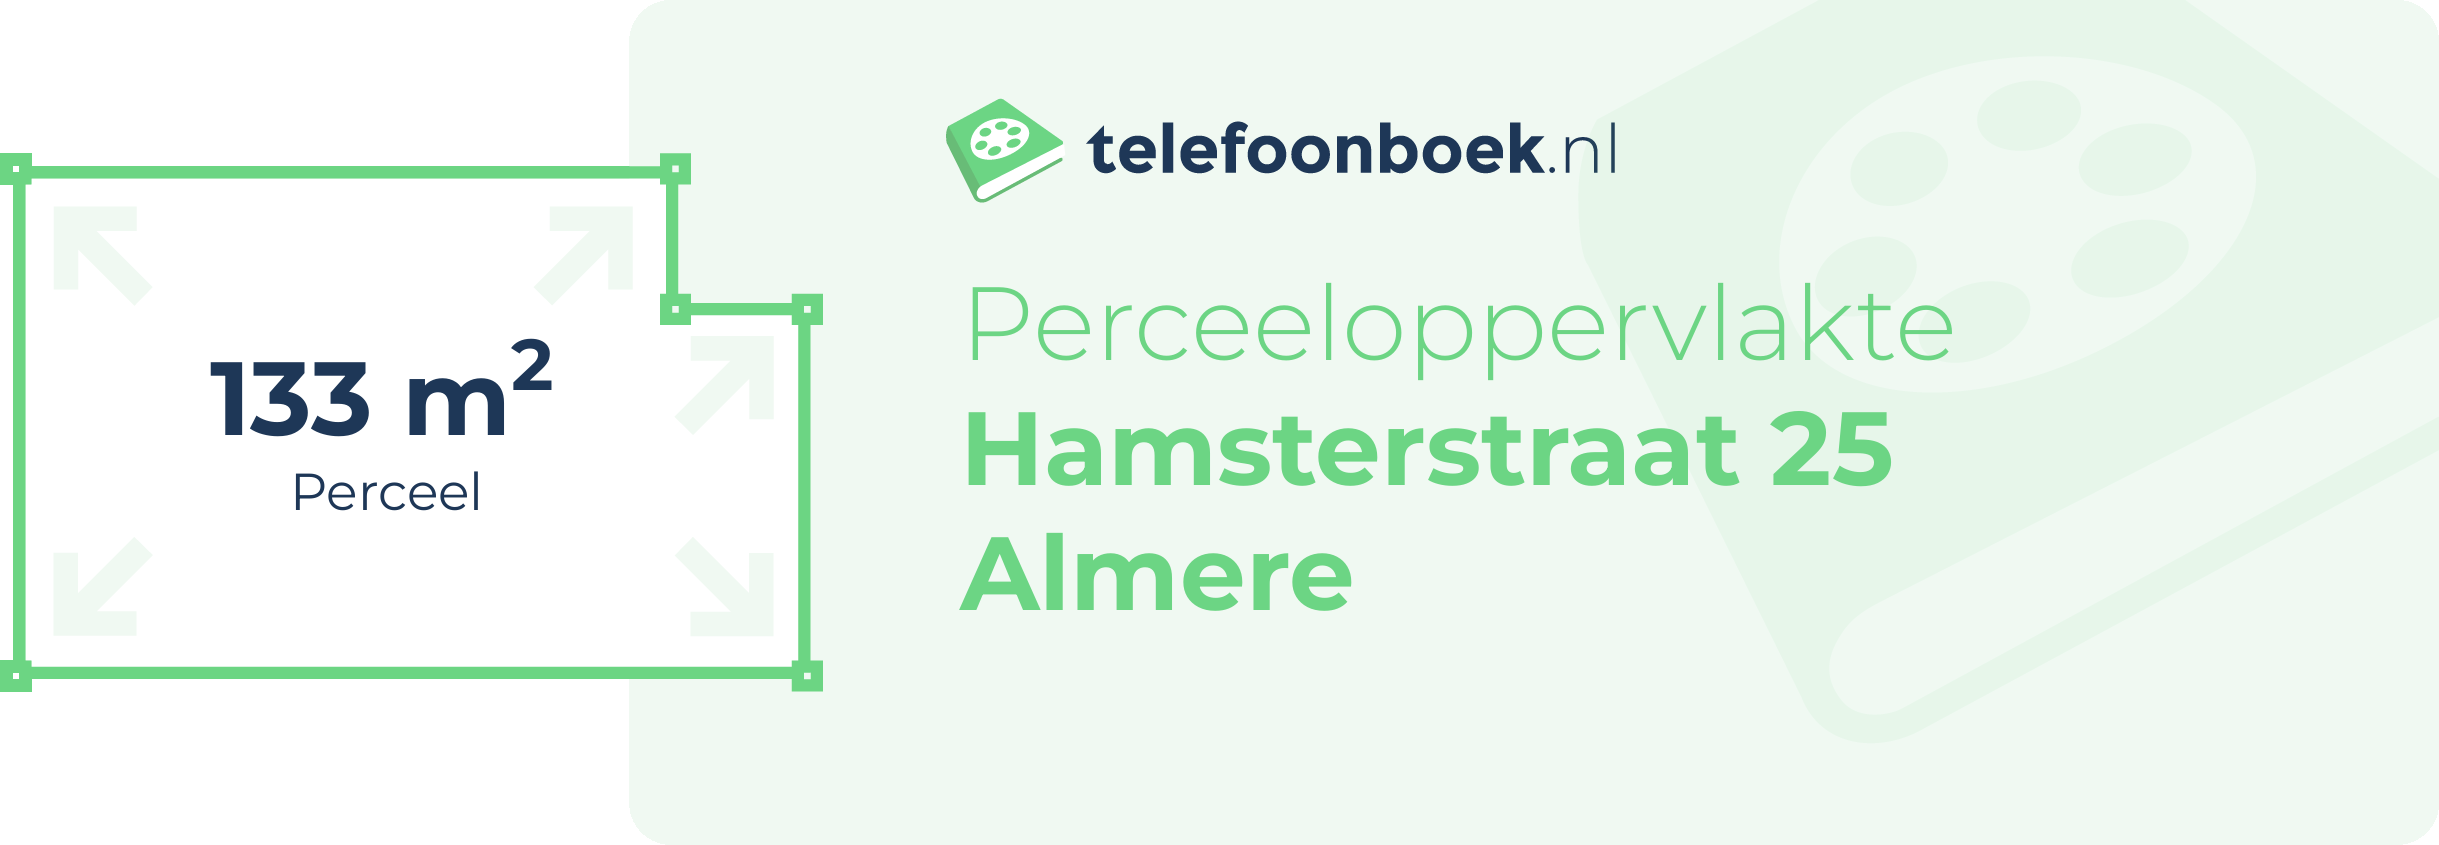 Perceeloppervlakte Hamsterstraat 25 Almere